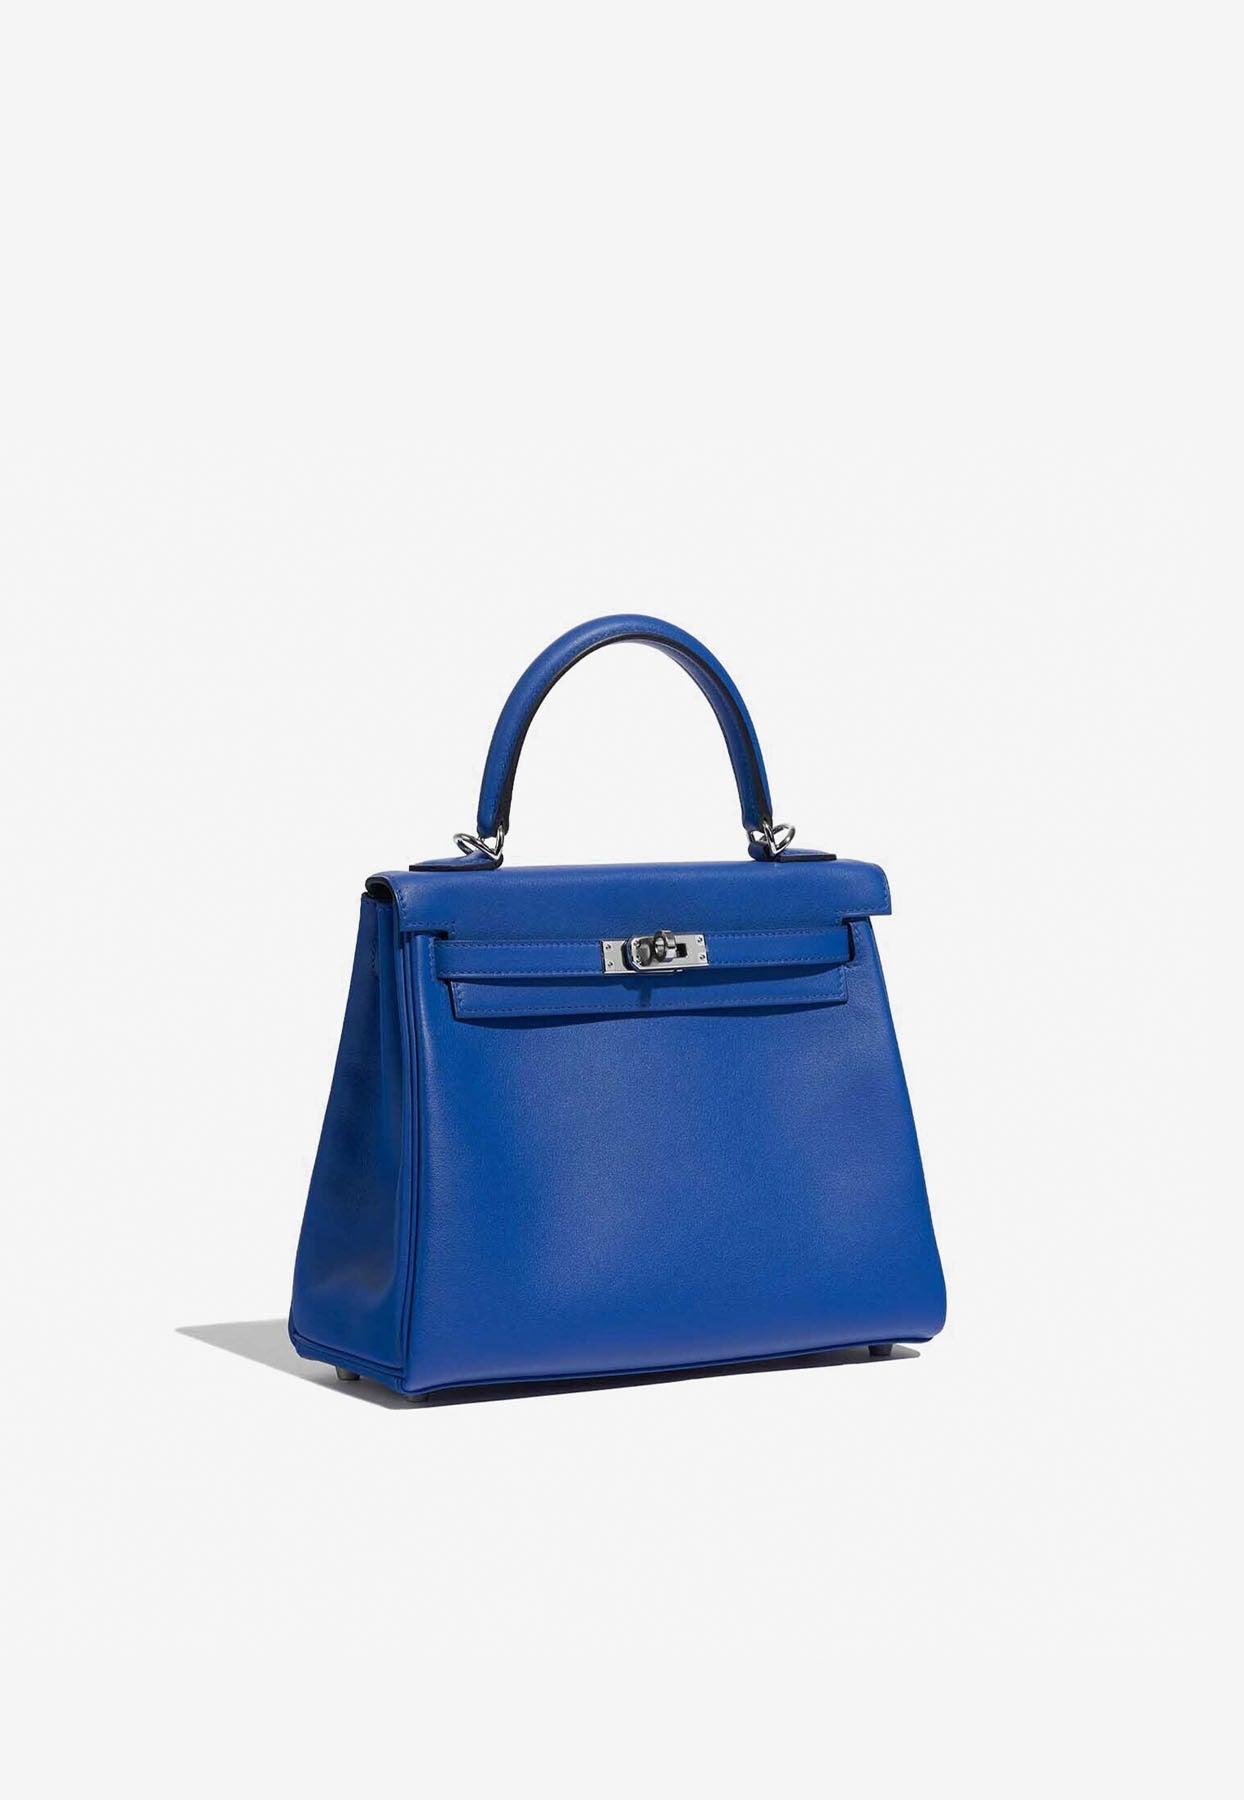 Sold at Auction: Hermes - Kelly Danse II 2019 - Deep Blue - Belt Bag -  Swift Leather